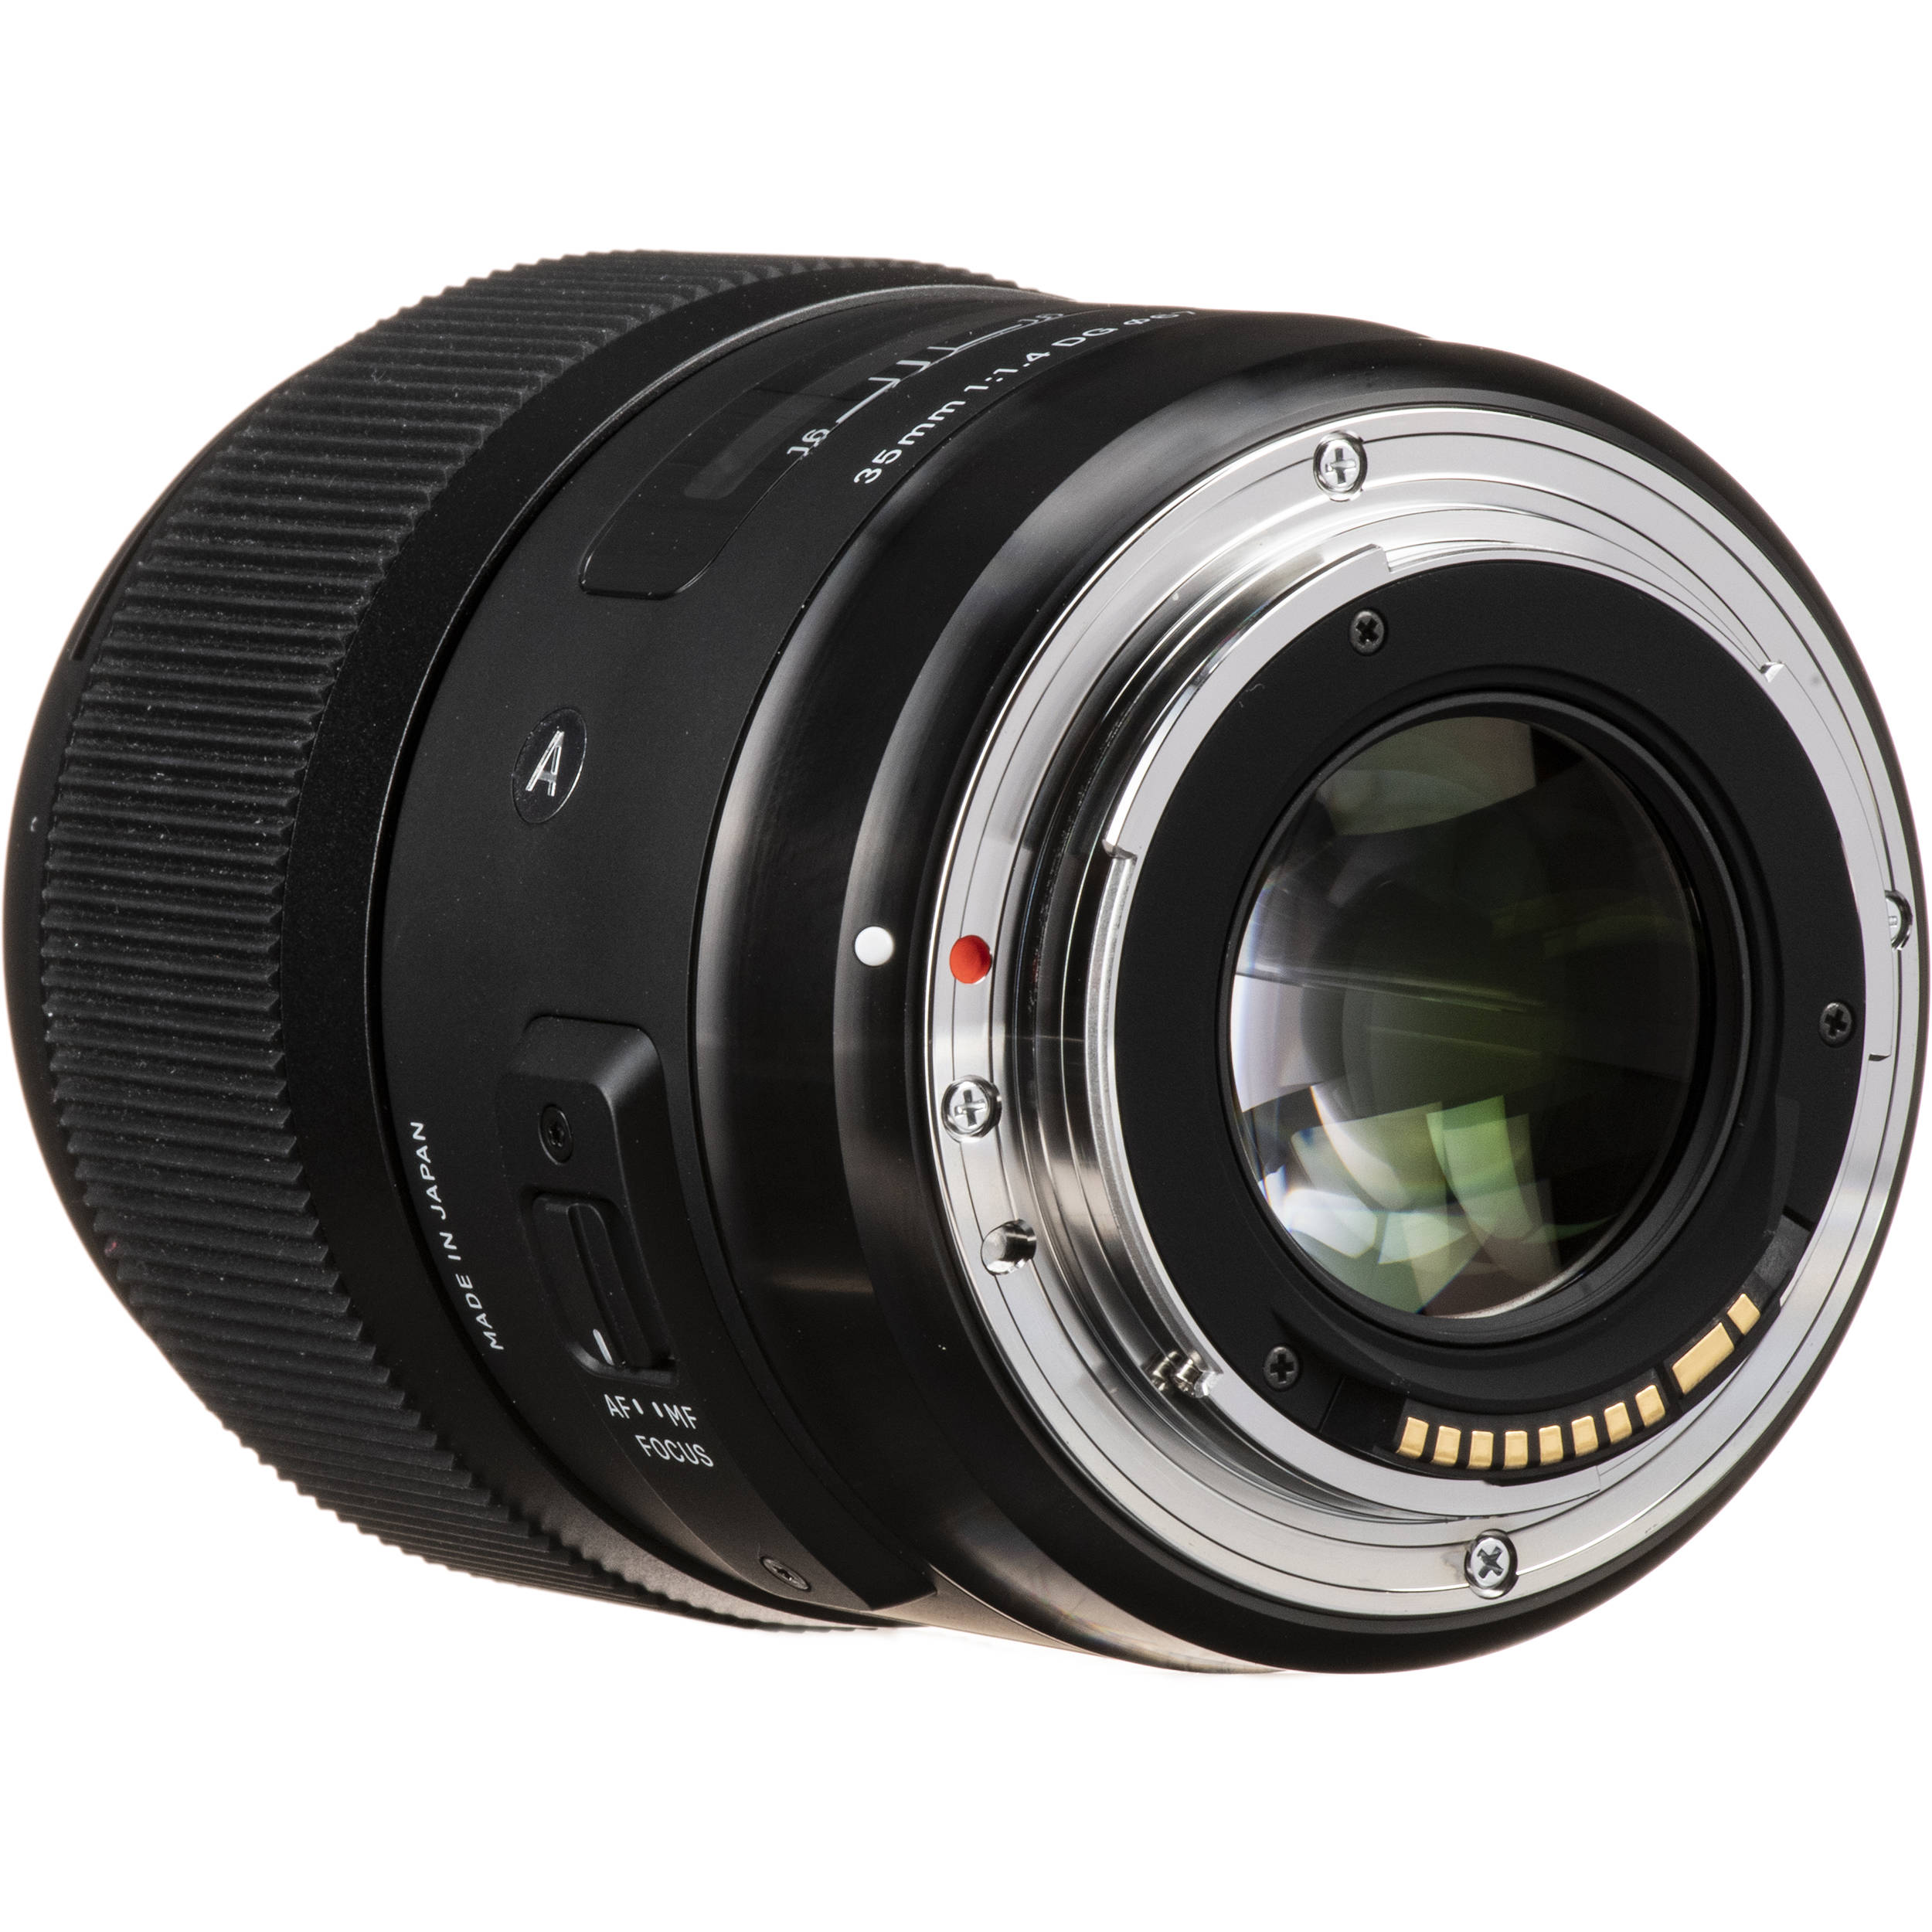 Sigma 35mm F 1 4 Dg Hsm Art Lens For Canon Ef 340 101 B H Photo